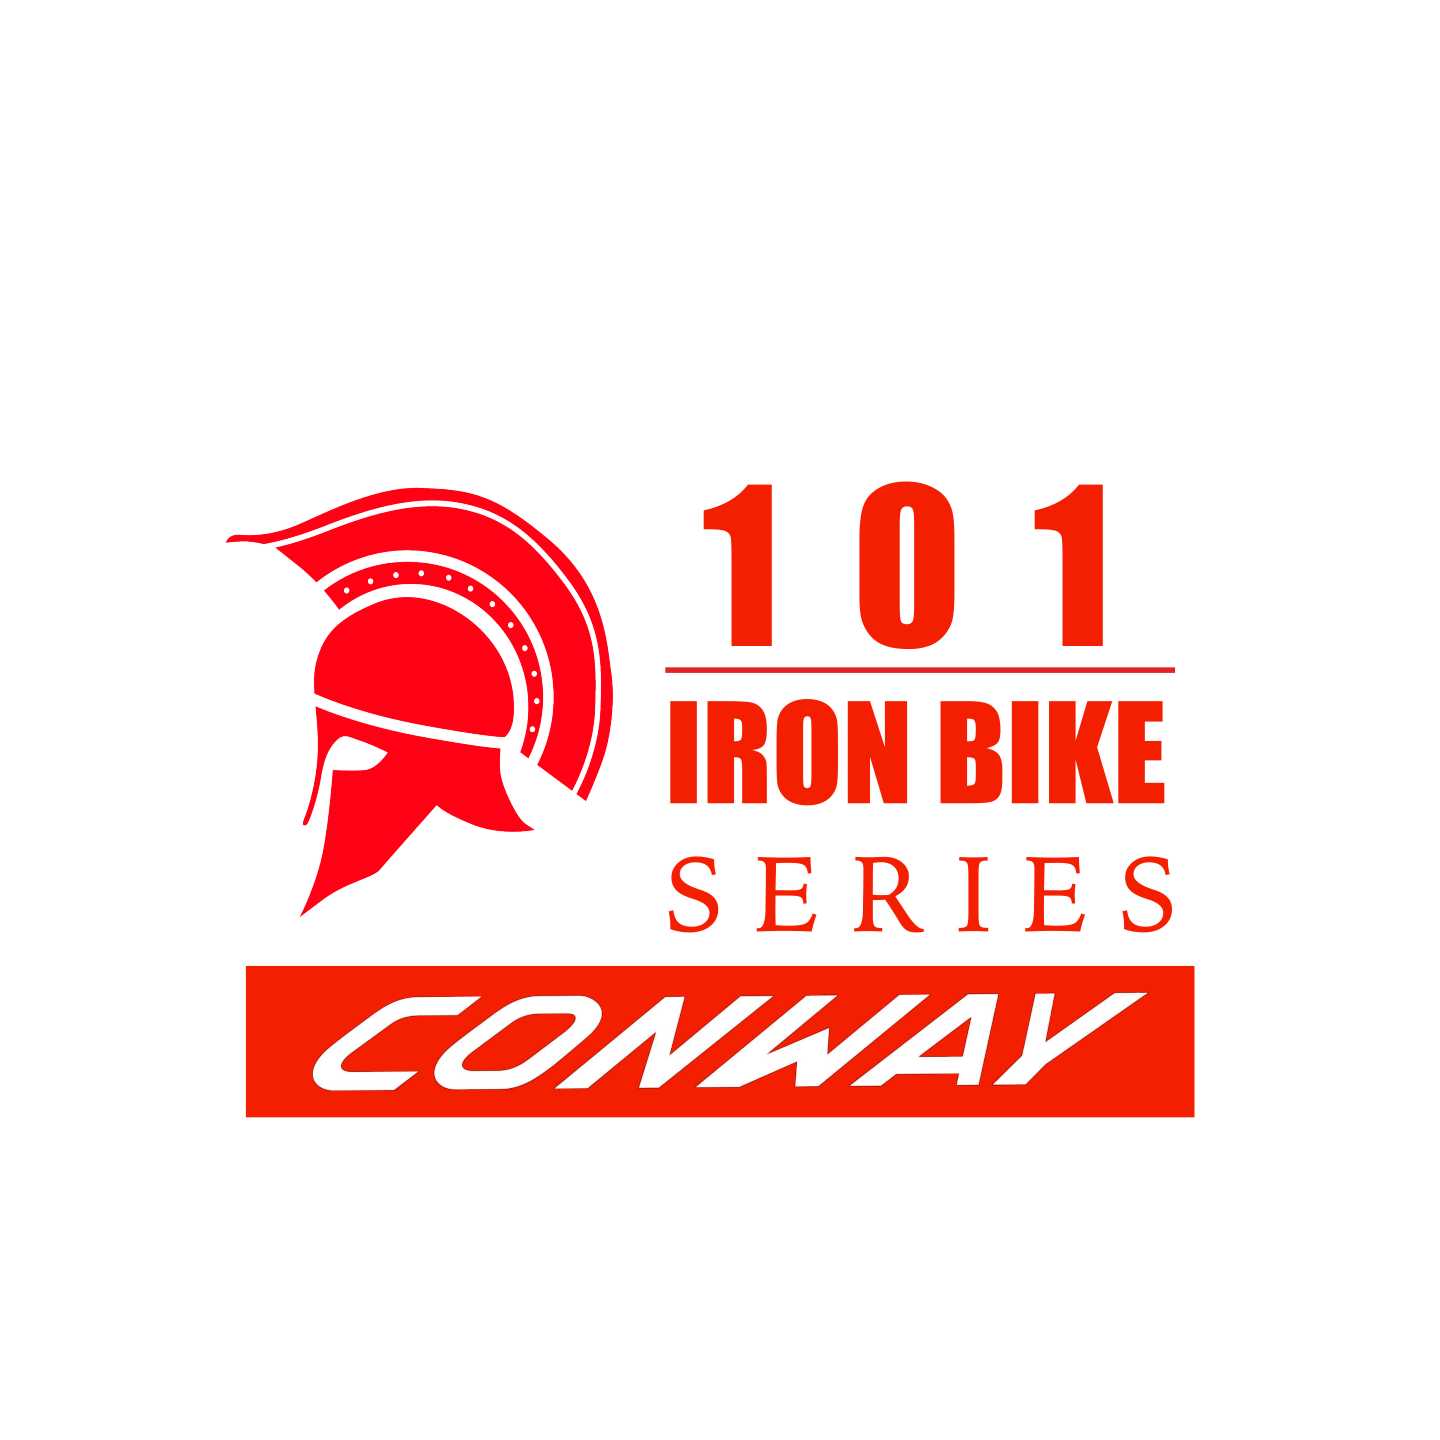 Circuito Conway 101 Iron Bike series By Cactus